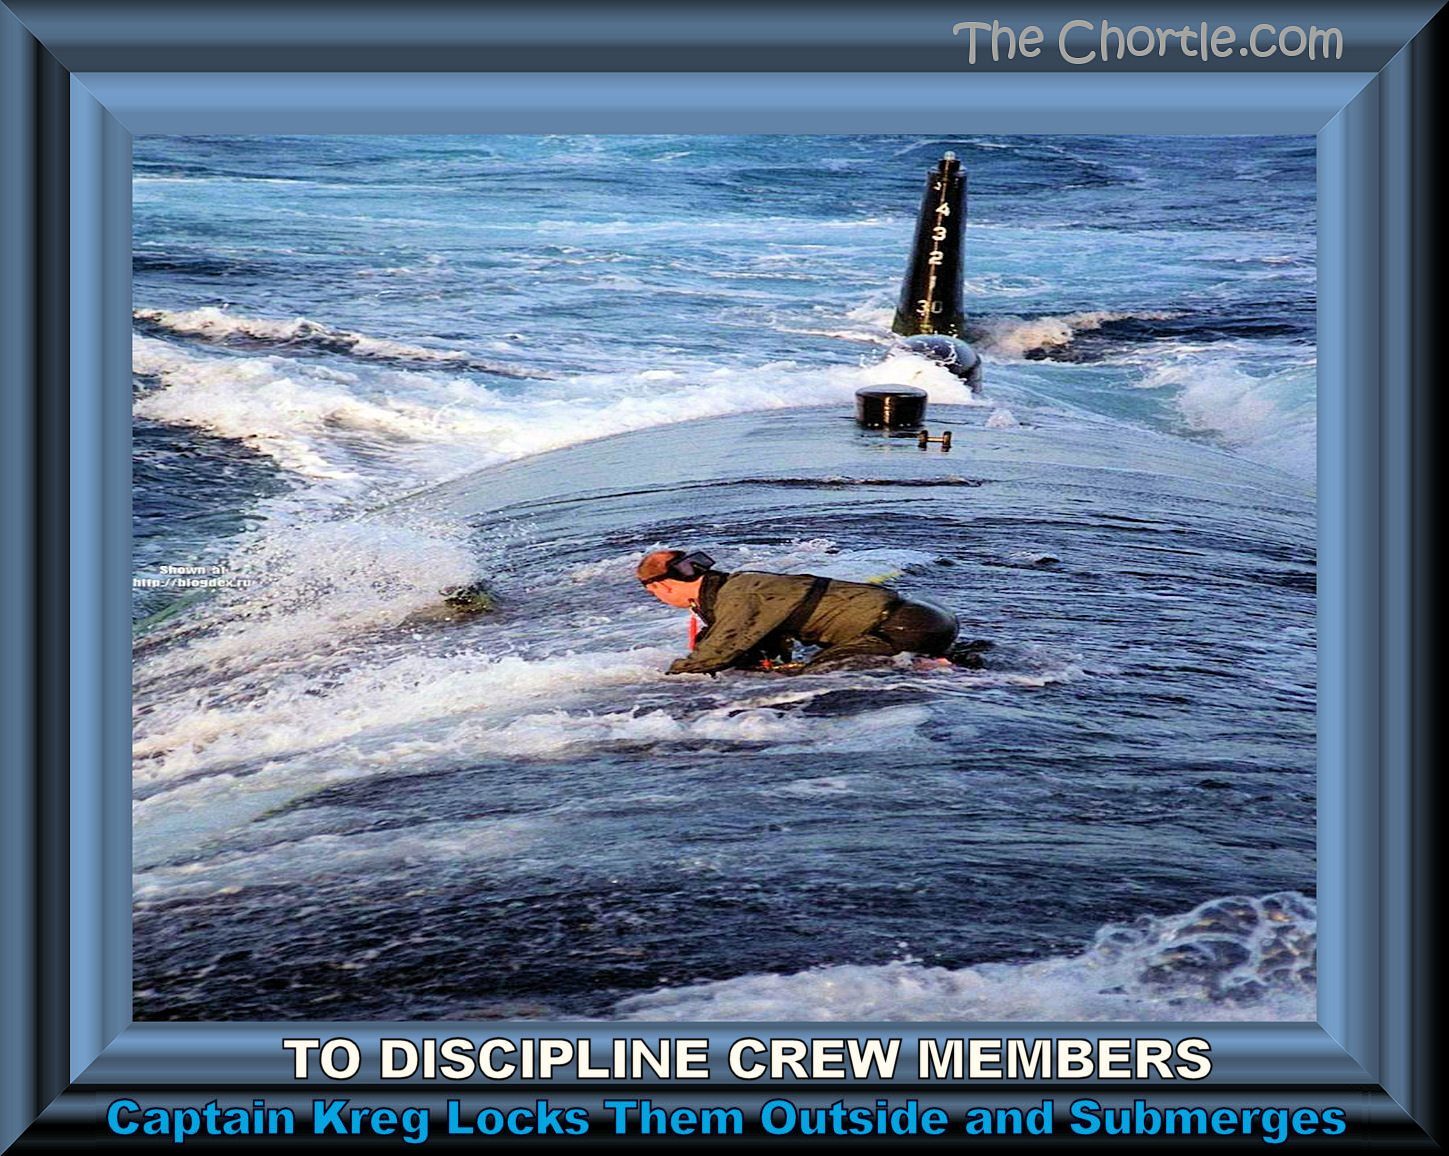 o discipline crew members, Captain Kreg locks them outside and submerges.